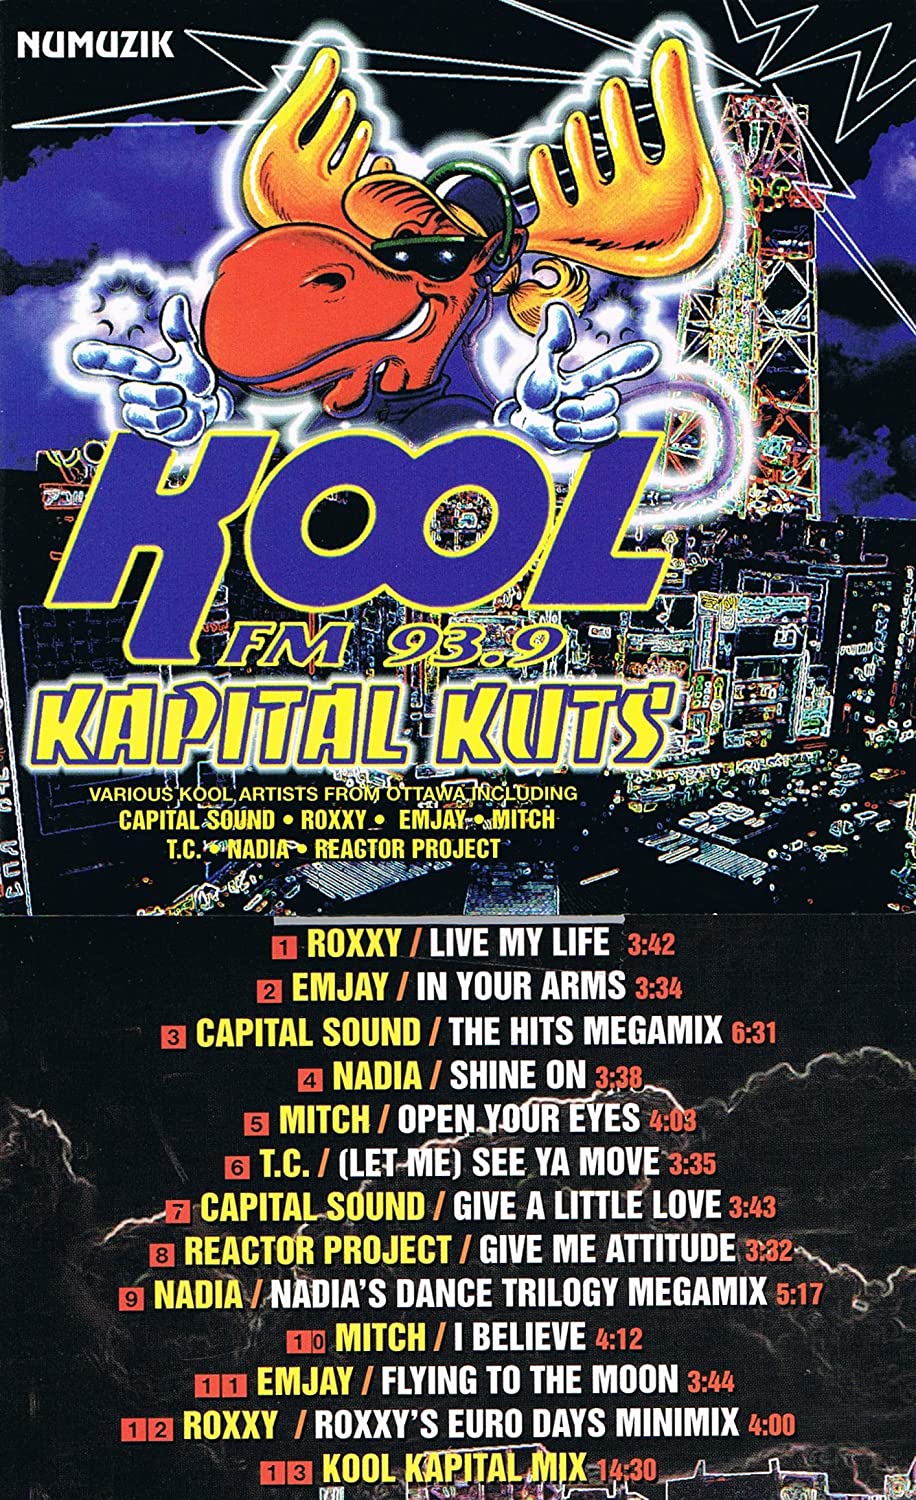 KOOL FM 93.9 - Kapital Kuts (13 Canadian Dance Hits) [Audio CD] Various Artists